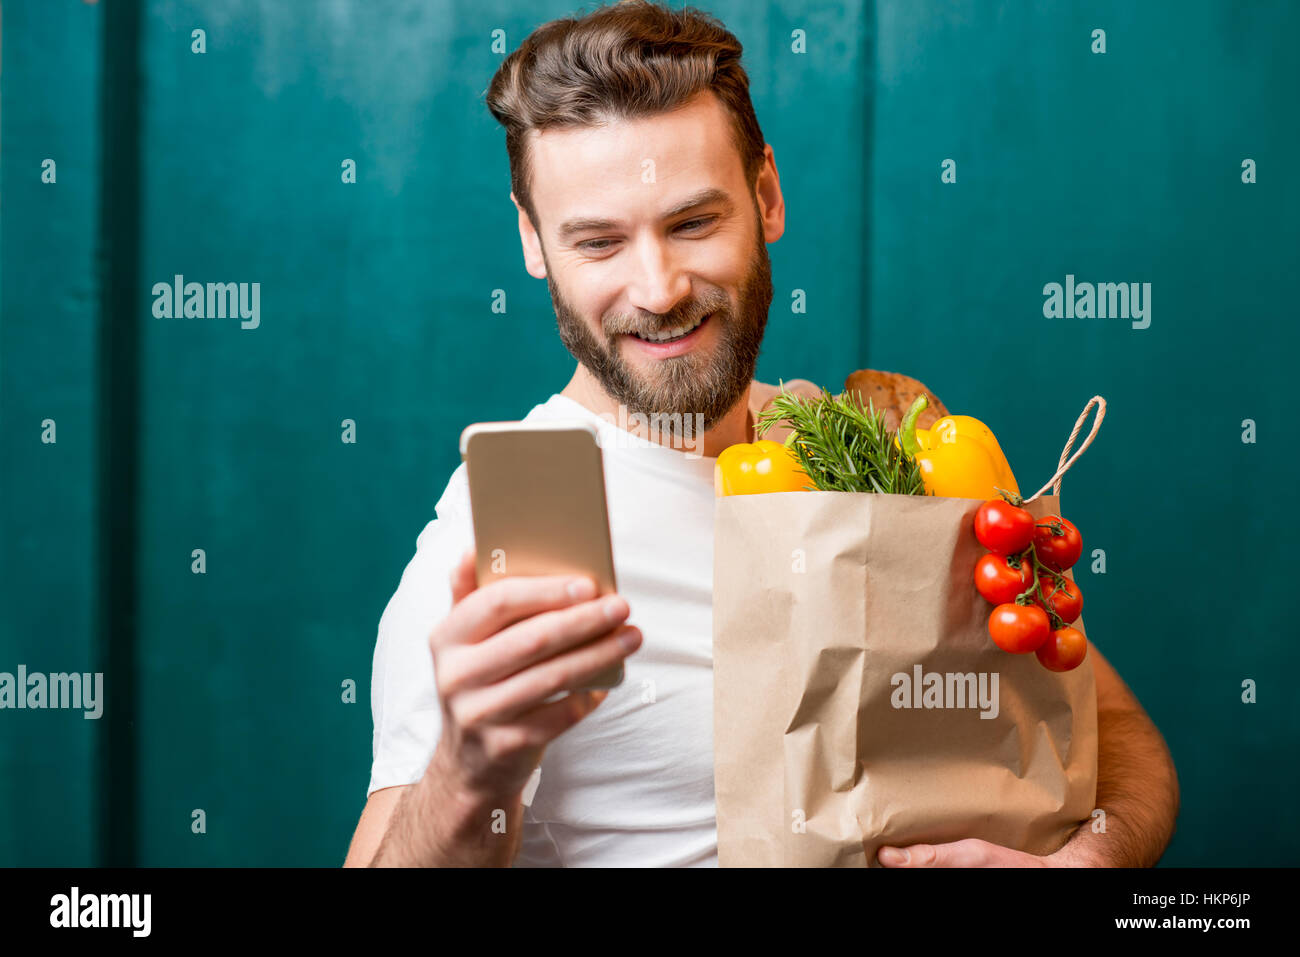 Man buying food online Stock Photo - Alamy